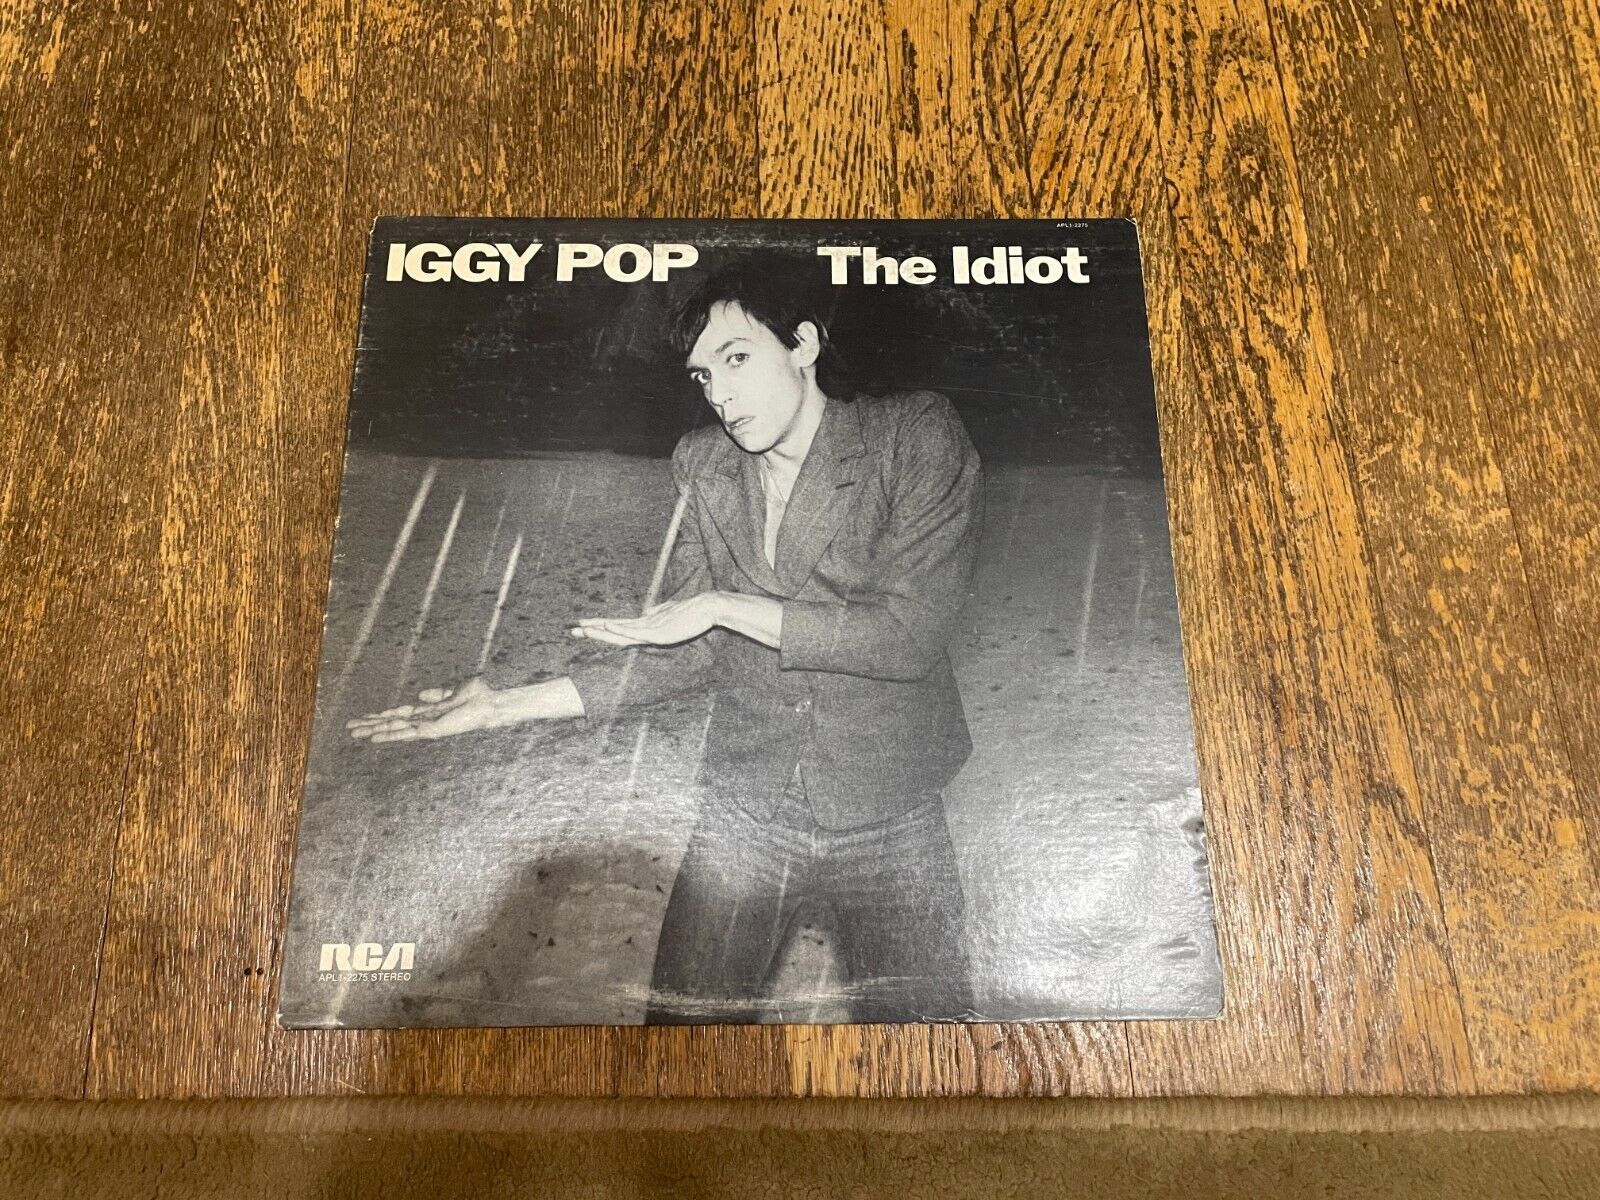 Iggy Pop LP - The Idiot - RCA Victor Records APL1 2275 1977